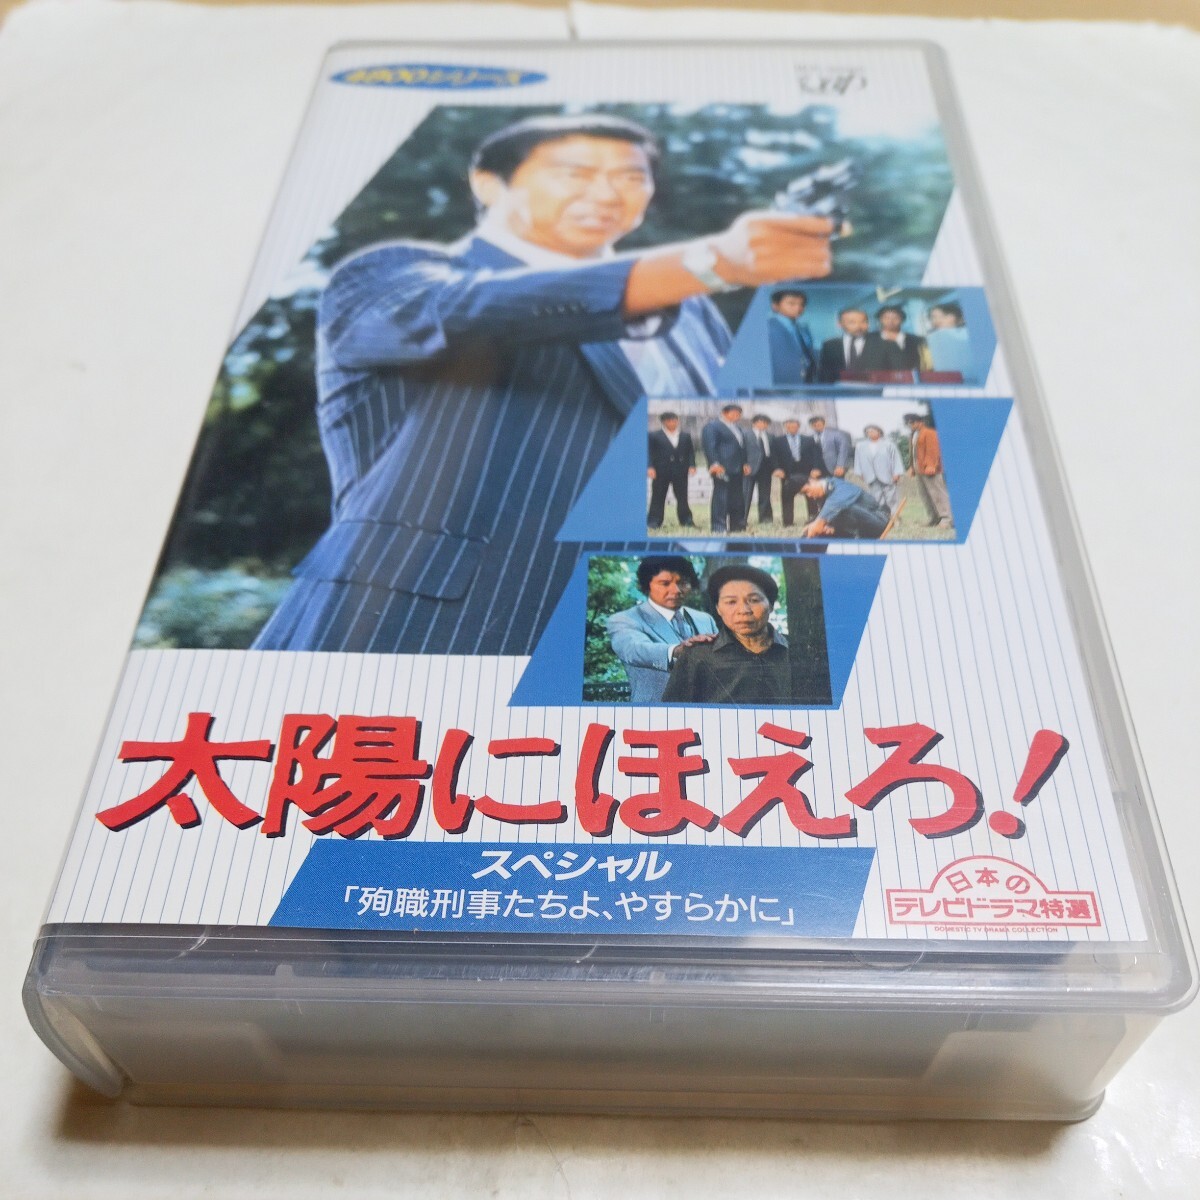 VHS video Taiyou ni Hoero! 4800 series Vol.8 special . job .....,... crab performance * stone .. next ., god rice field regular shining, gold rice field . one,...